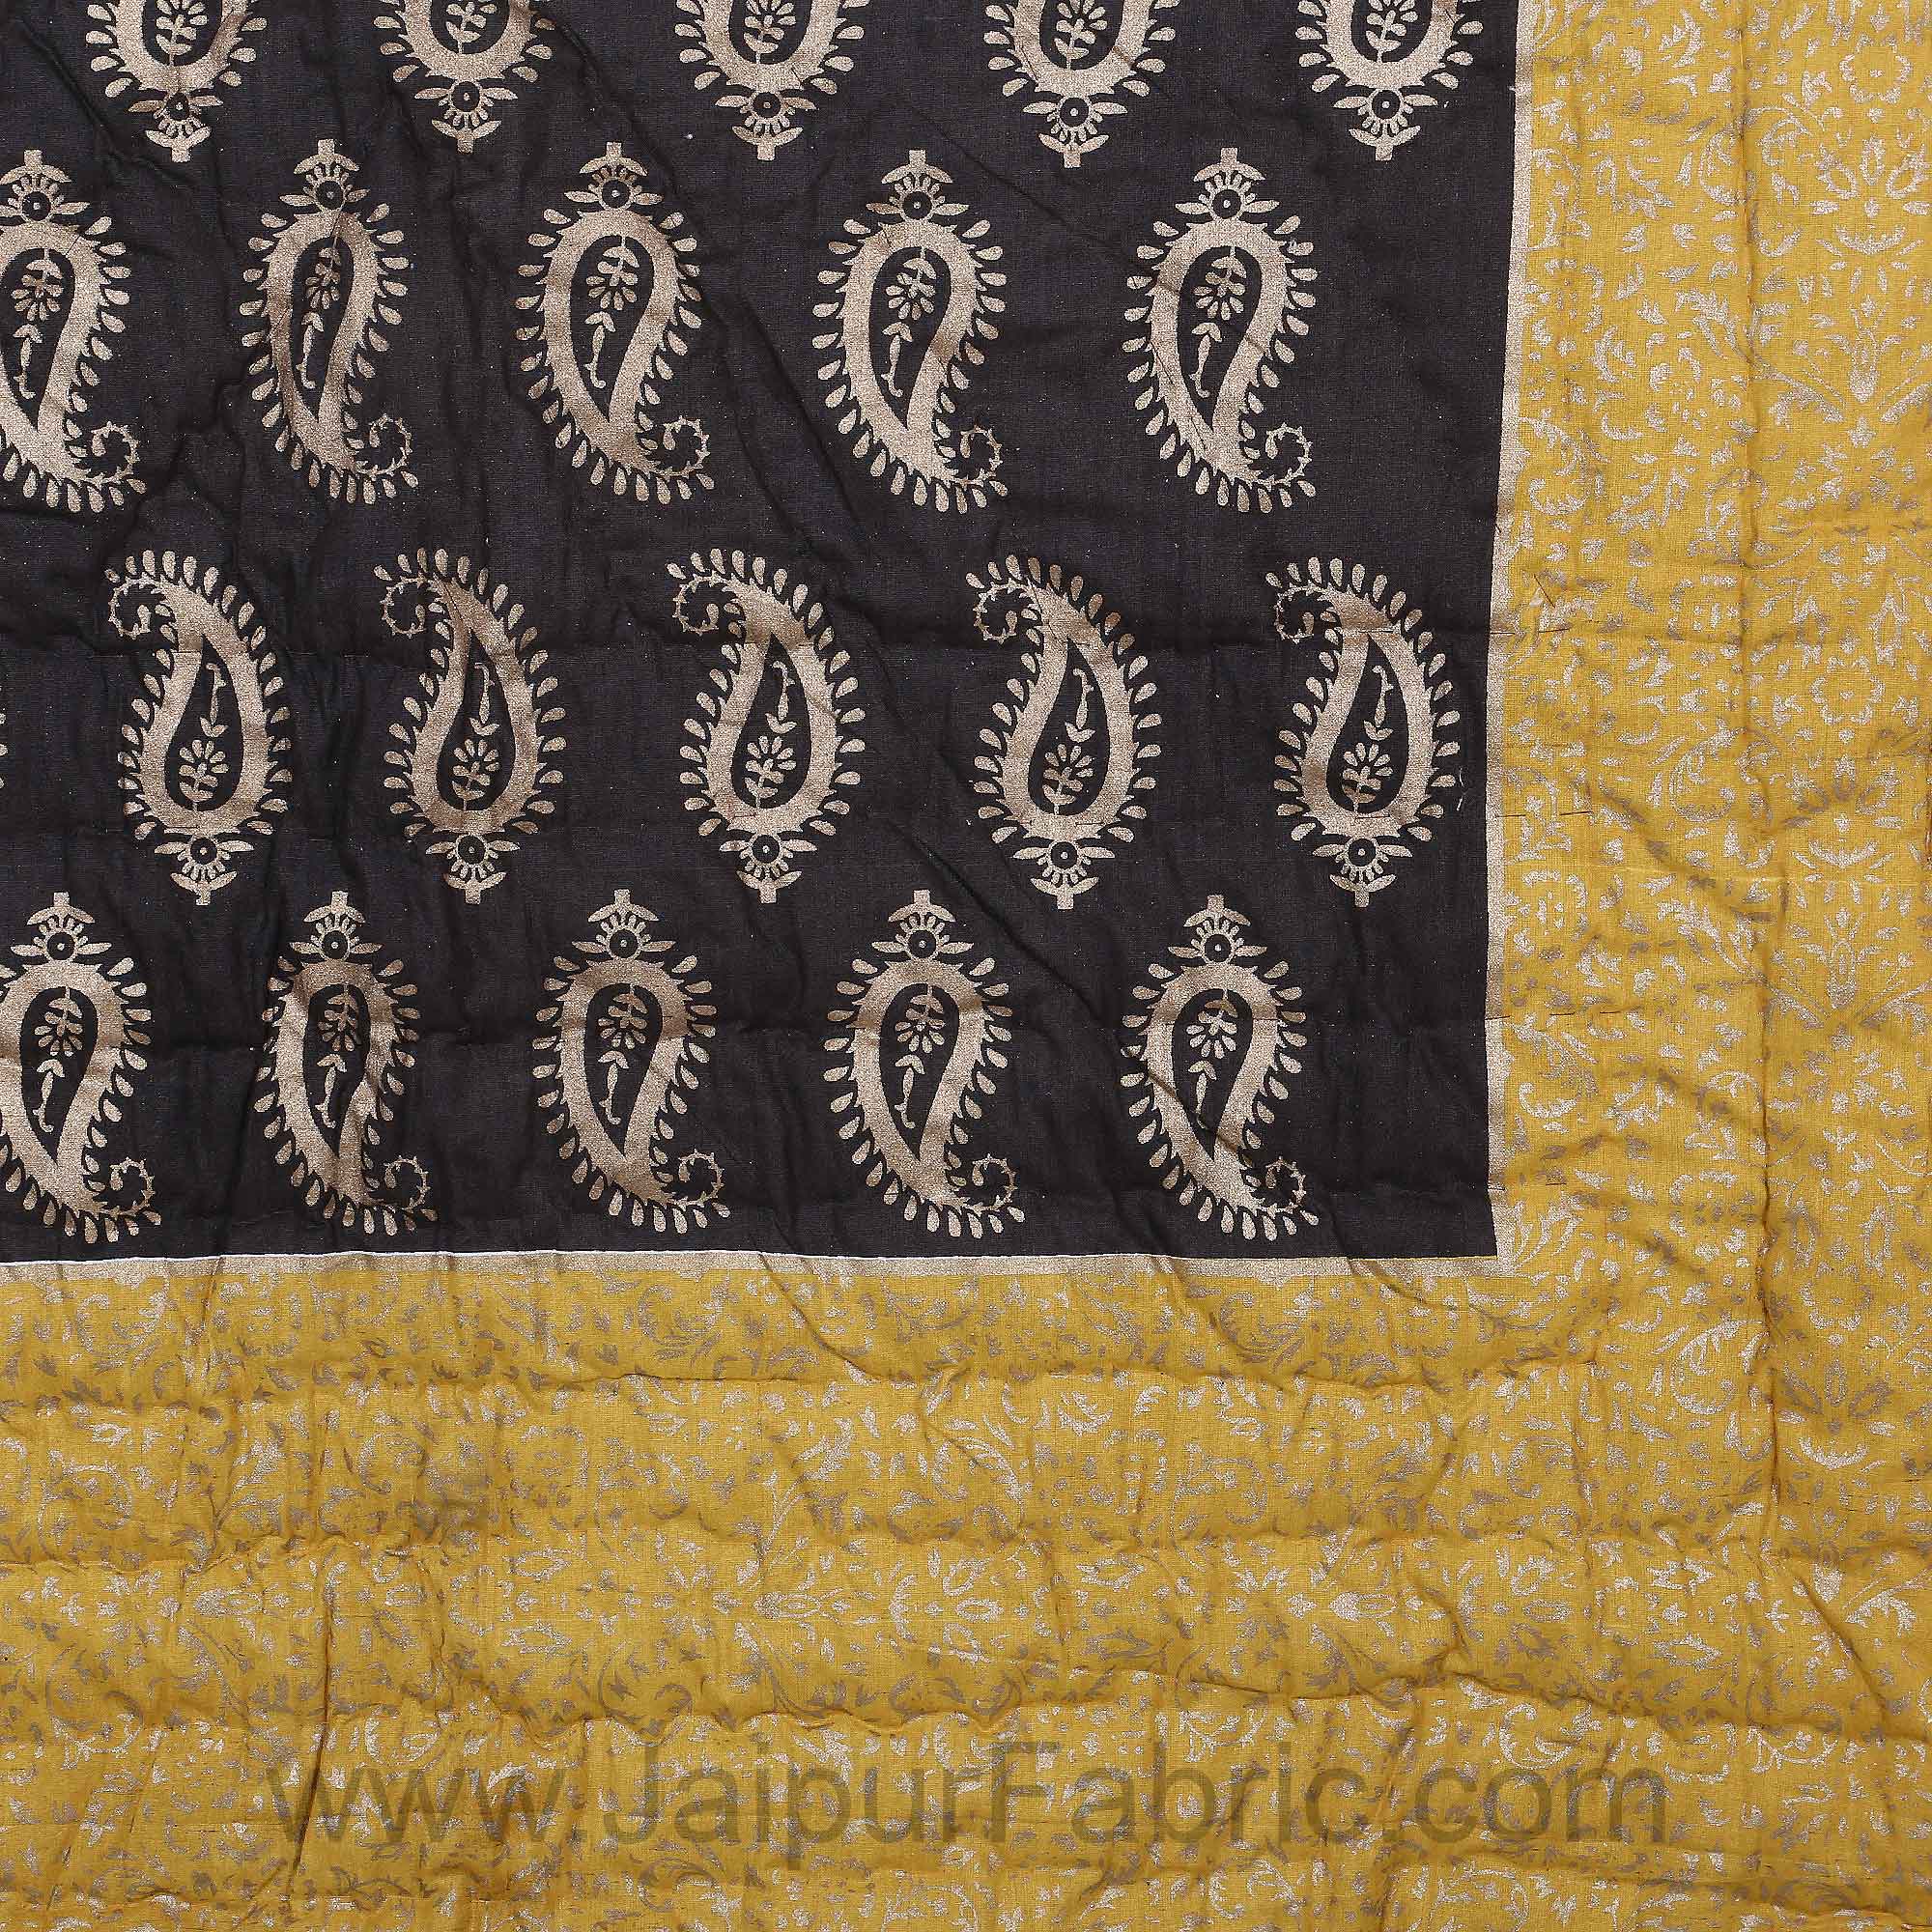 Jaipuri Printed Single Bed Razai Golden Yellow and Dark Brown Green with Paisley pattern